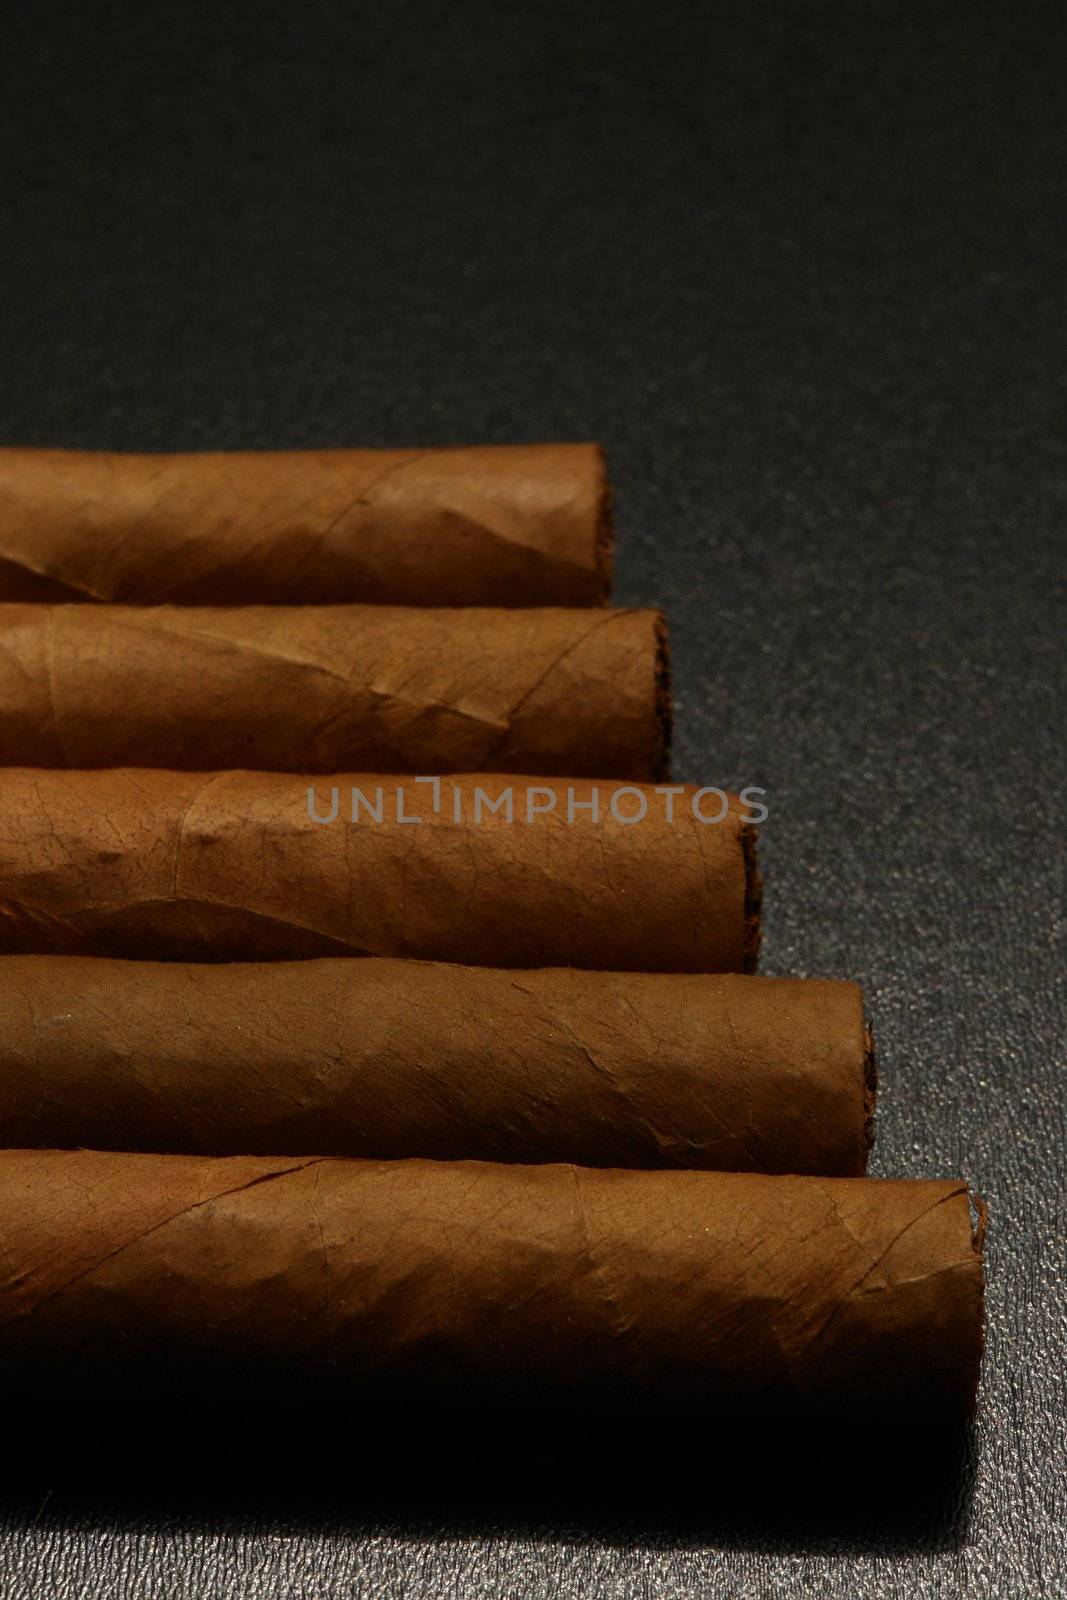 cigars in dramatic lighting.